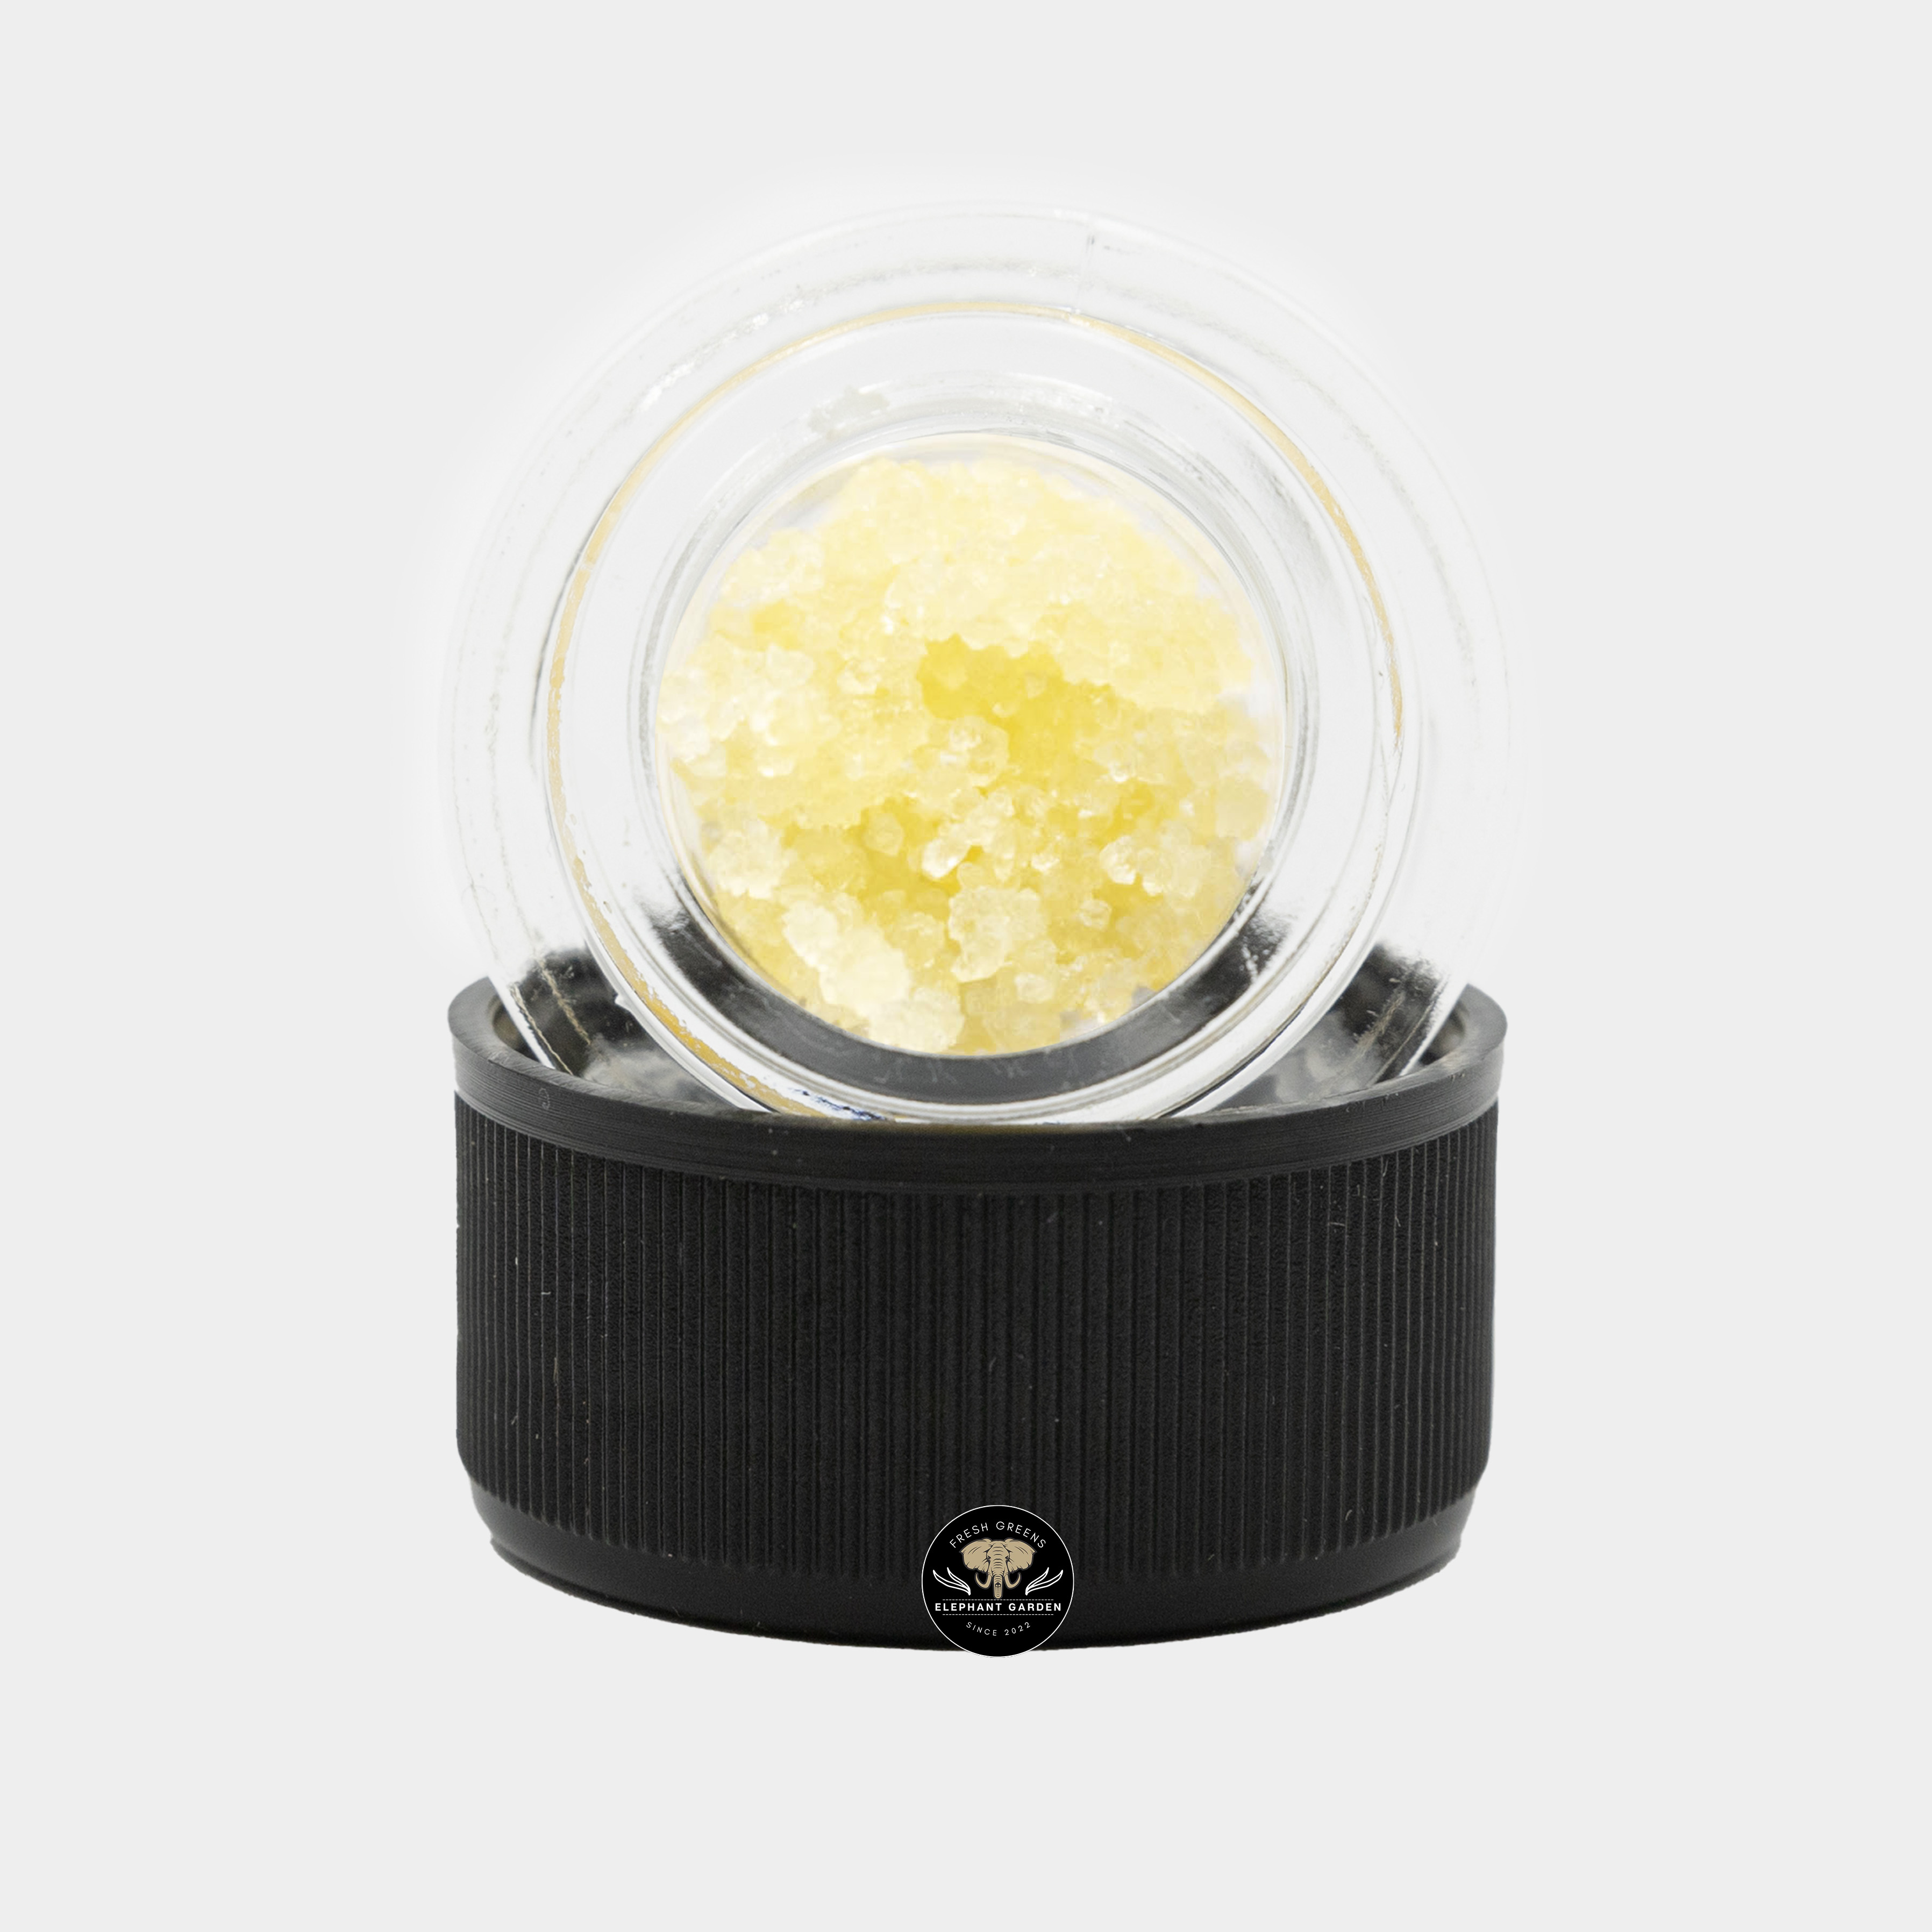 Sour Diesel Caviar